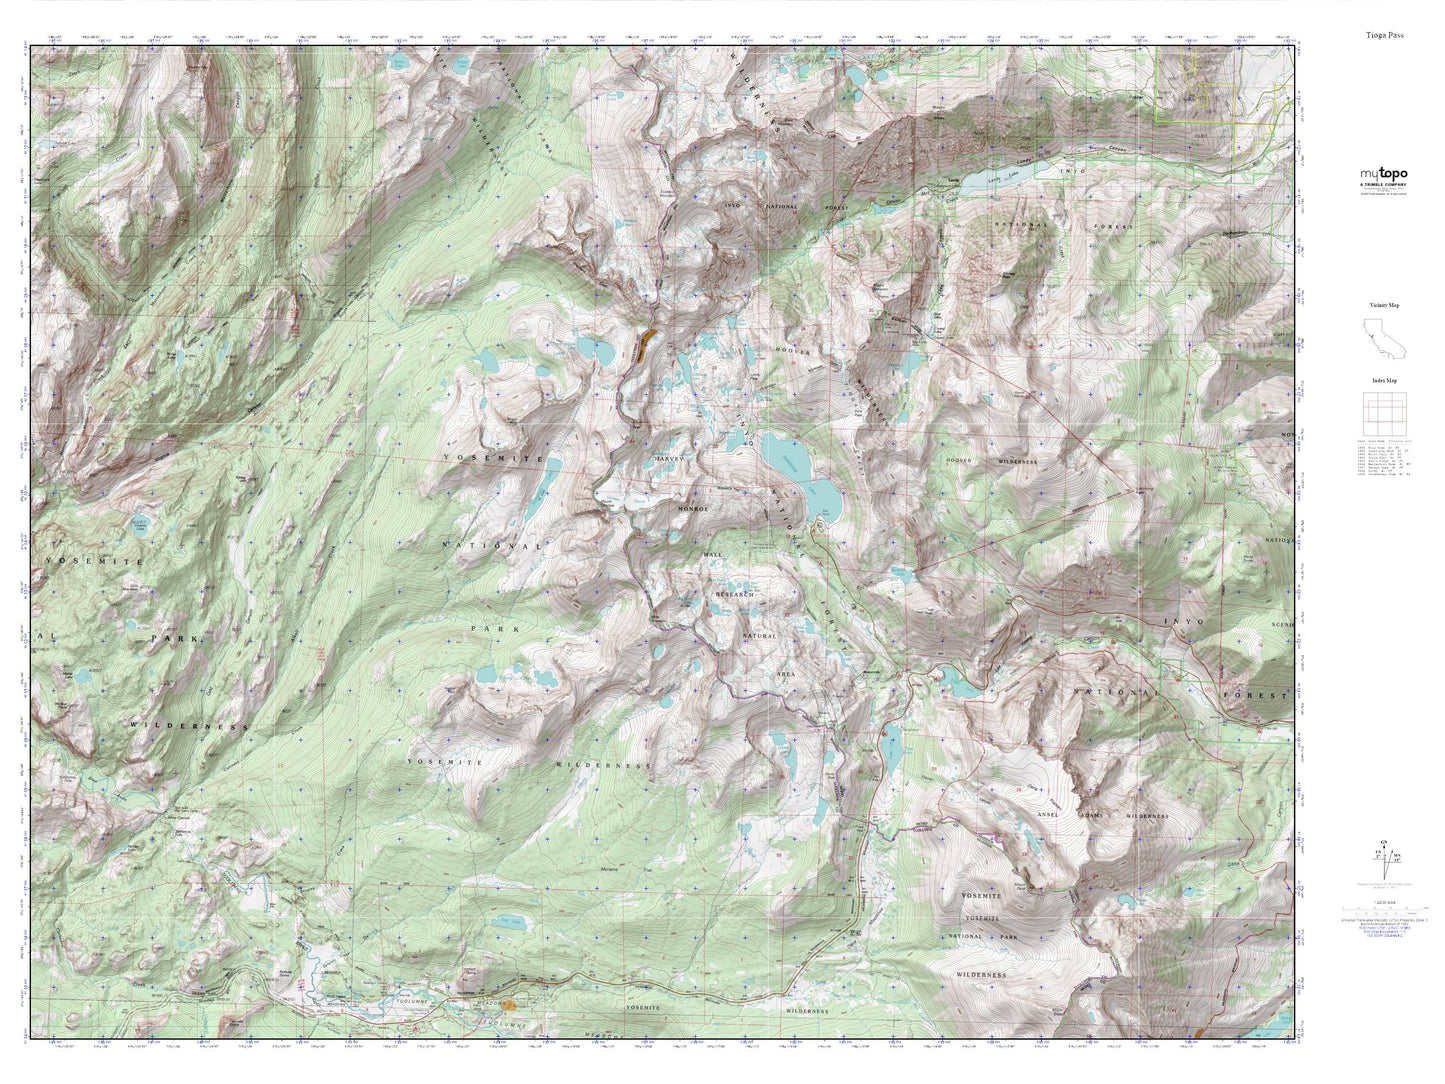 Tioga Pass MyTopo Explorer Series Map Image